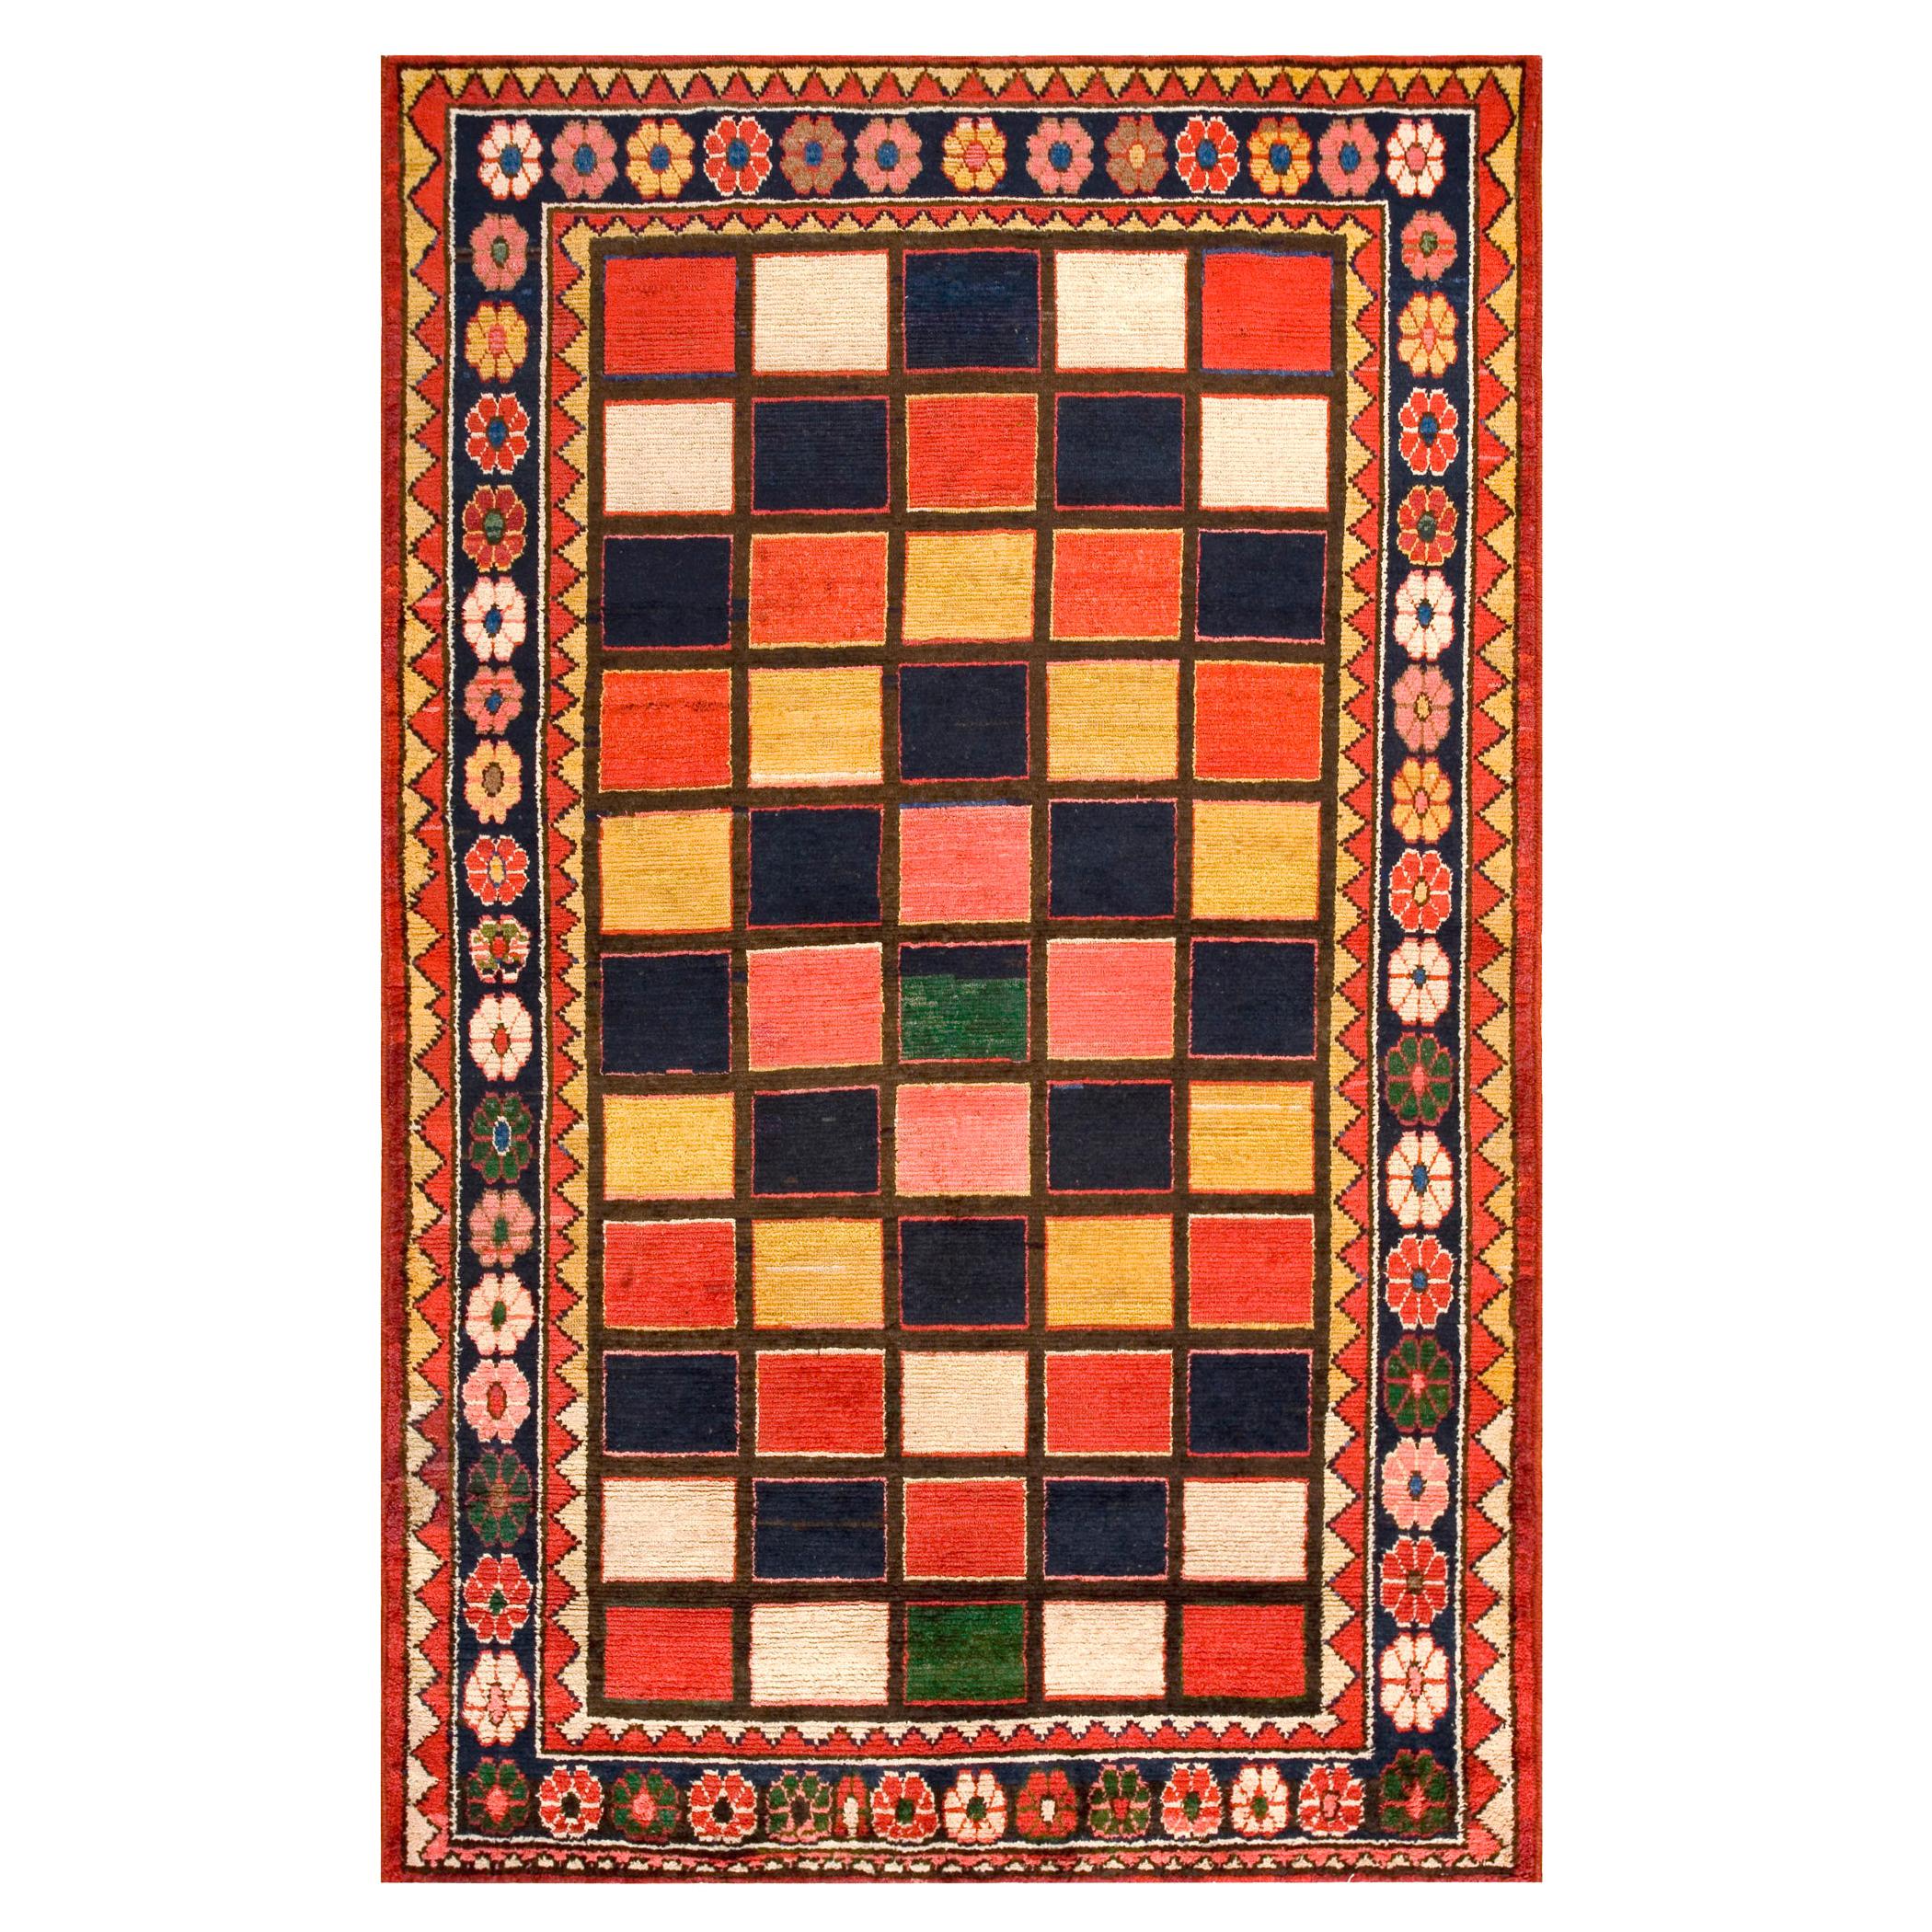 Early 20th Century S. Persian Gabbeh Carpet ( 5'10" x 9'4" - 178 x 285 )